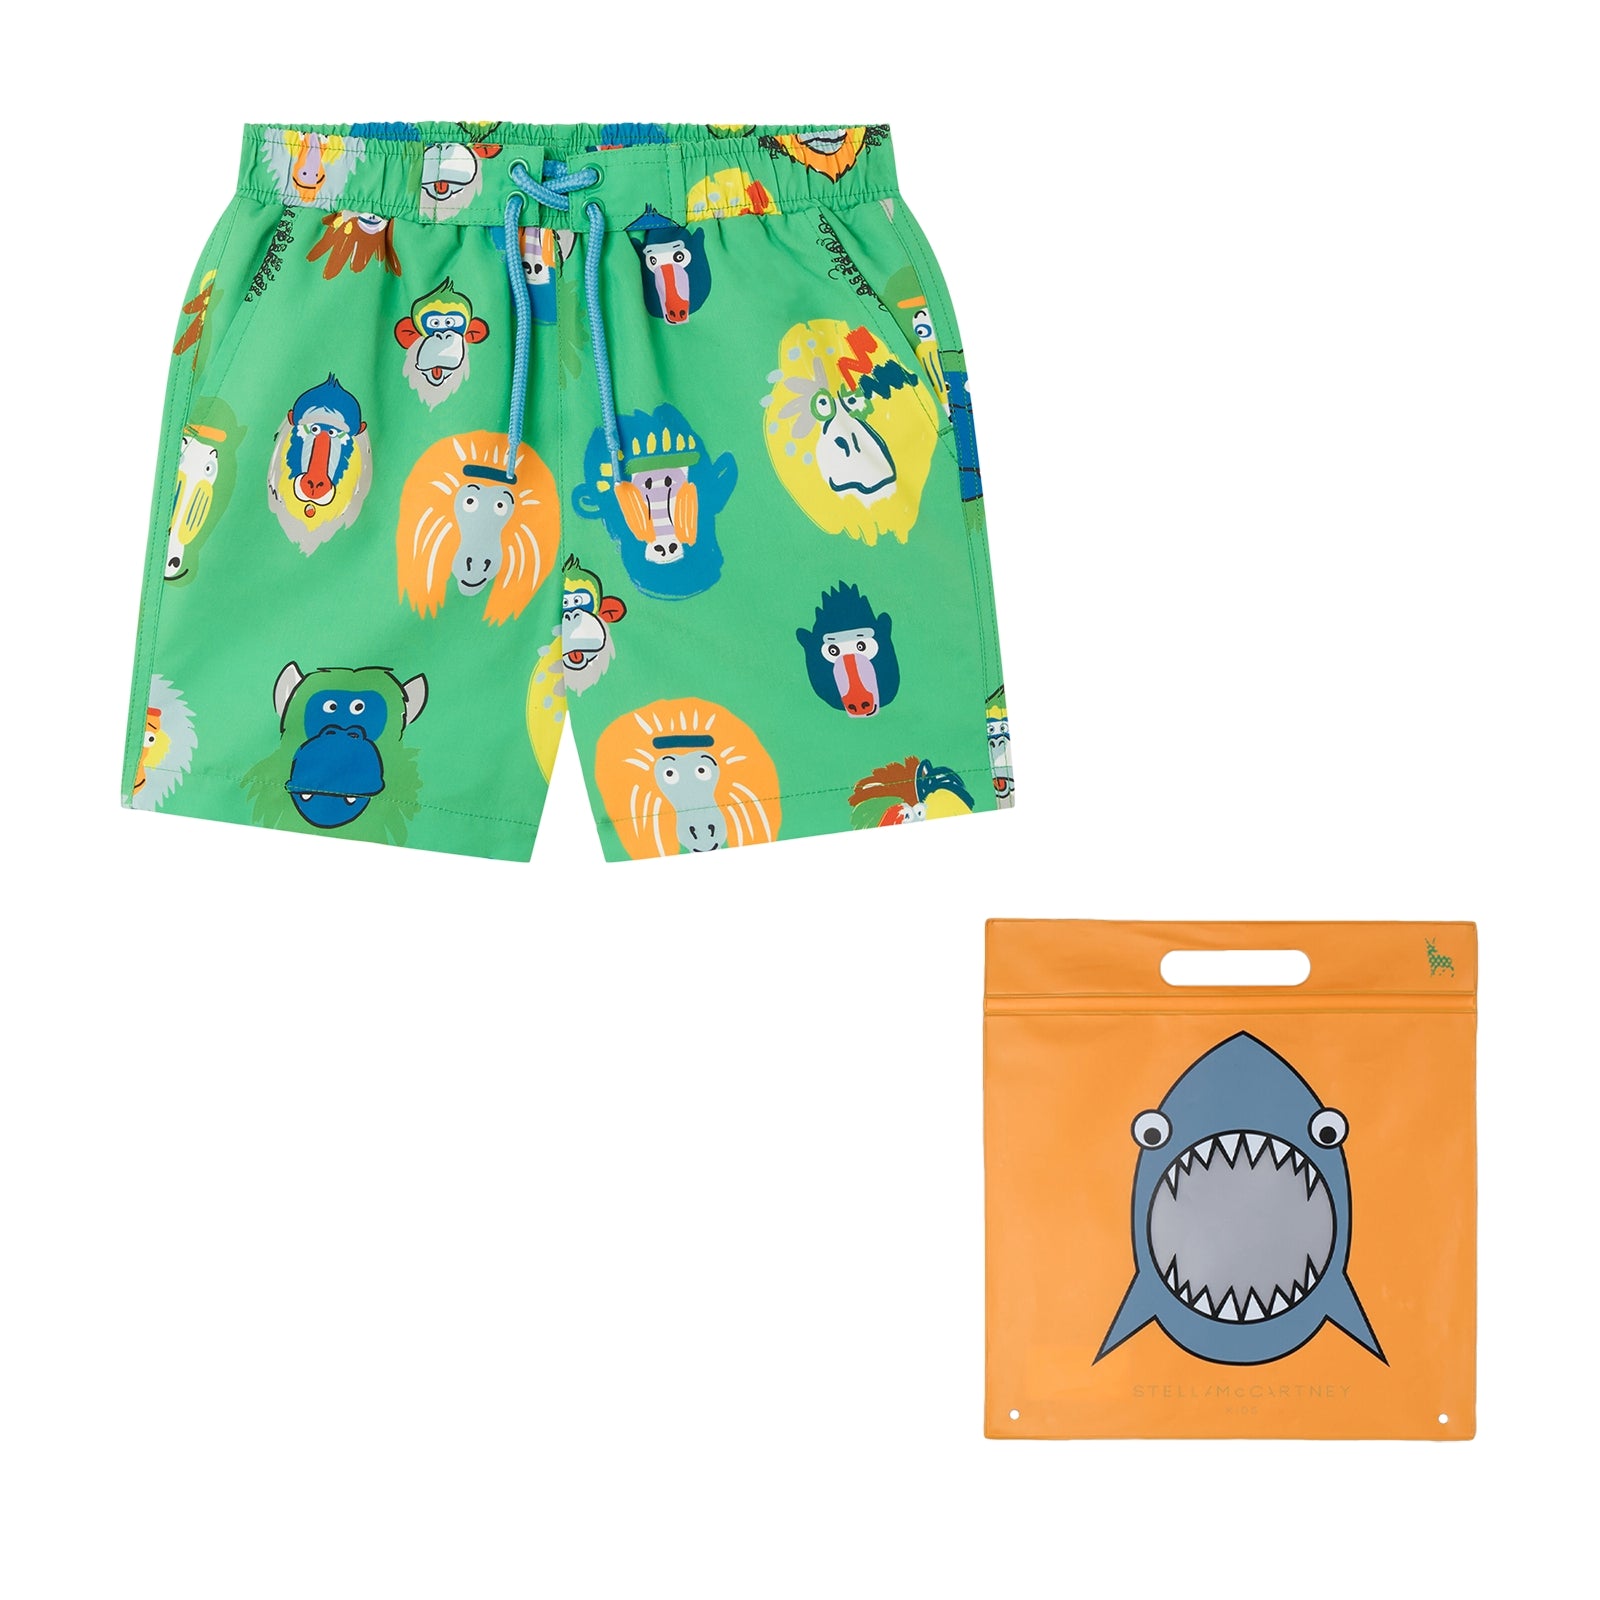 Boys Green Printed Swim Shorts